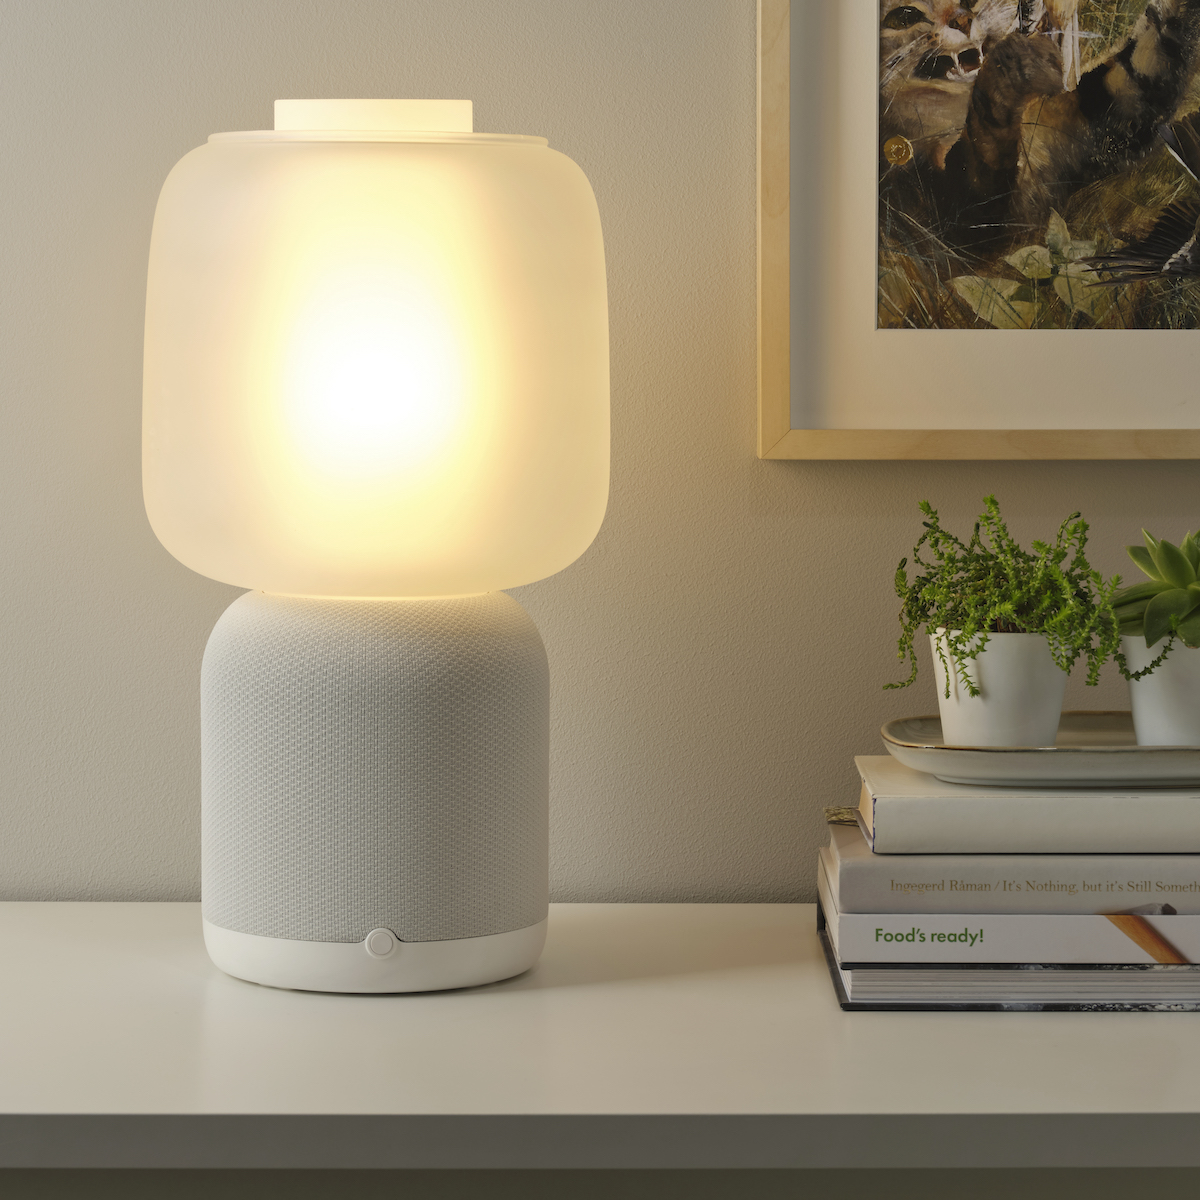 La lampe de table avec enceinte Sonos // Source : IKEA